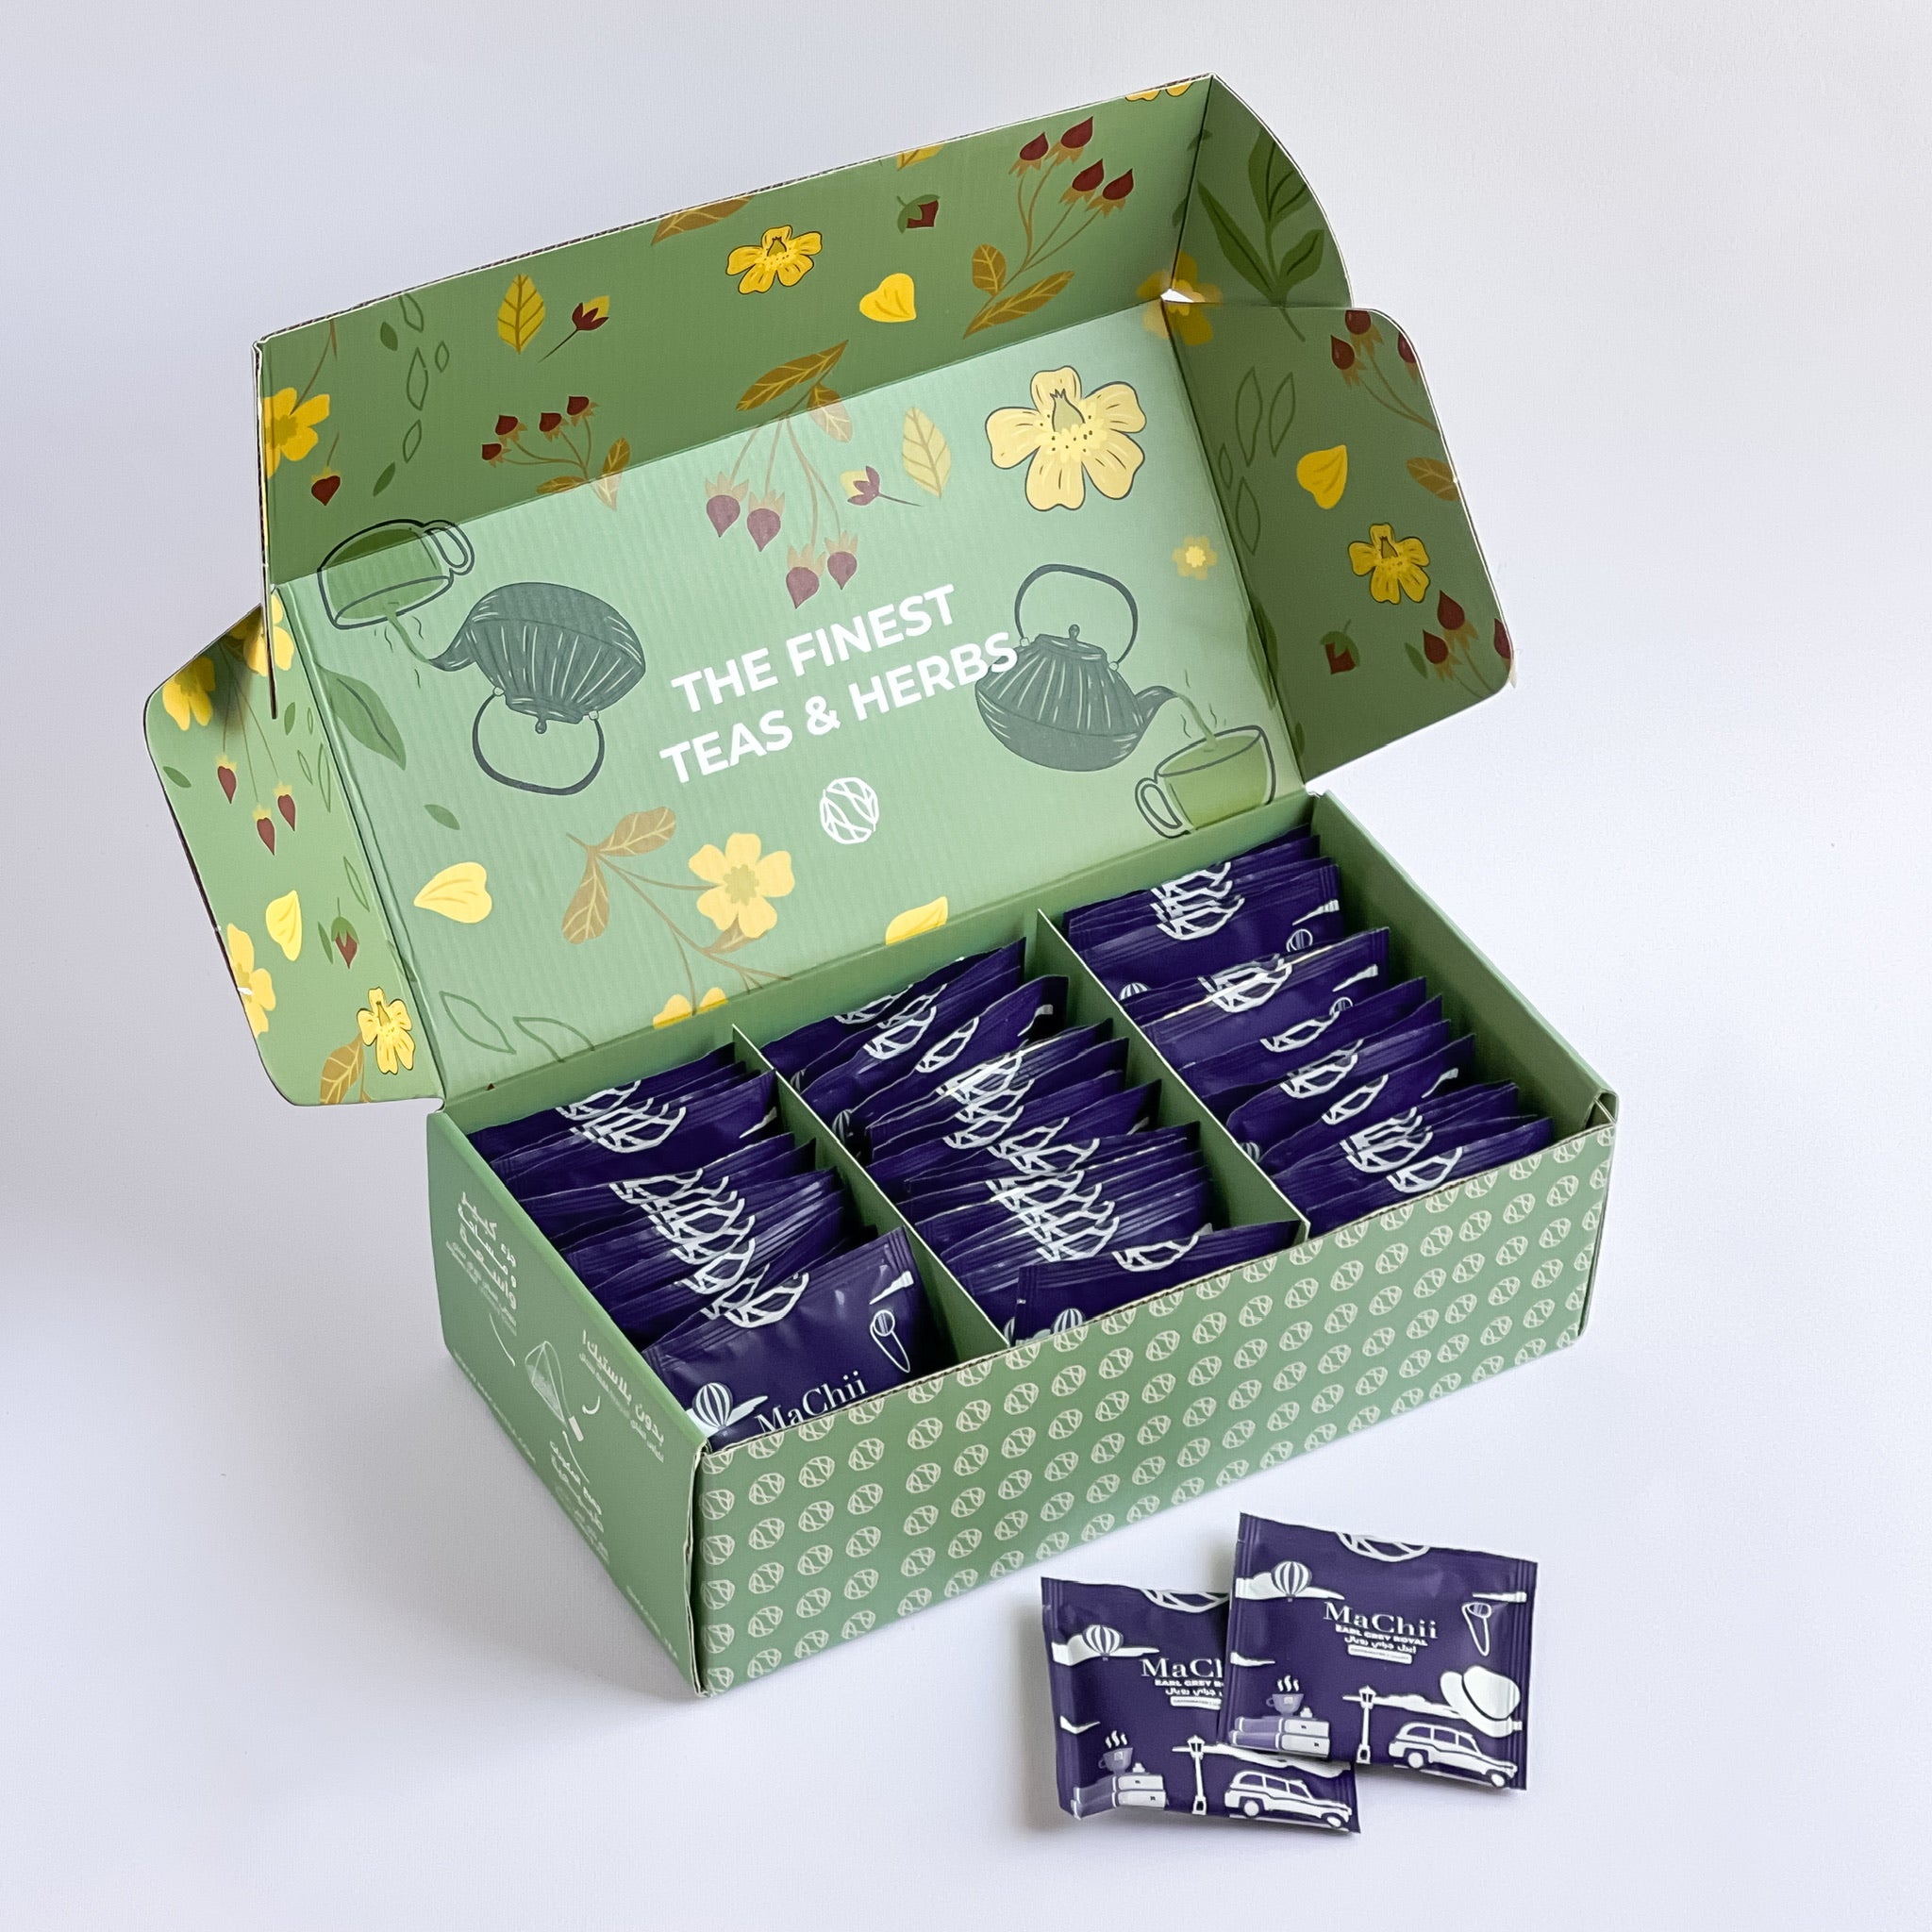 50 organic earl grey royale envelopes in a wholesale green bulk boy MaChii Tea box